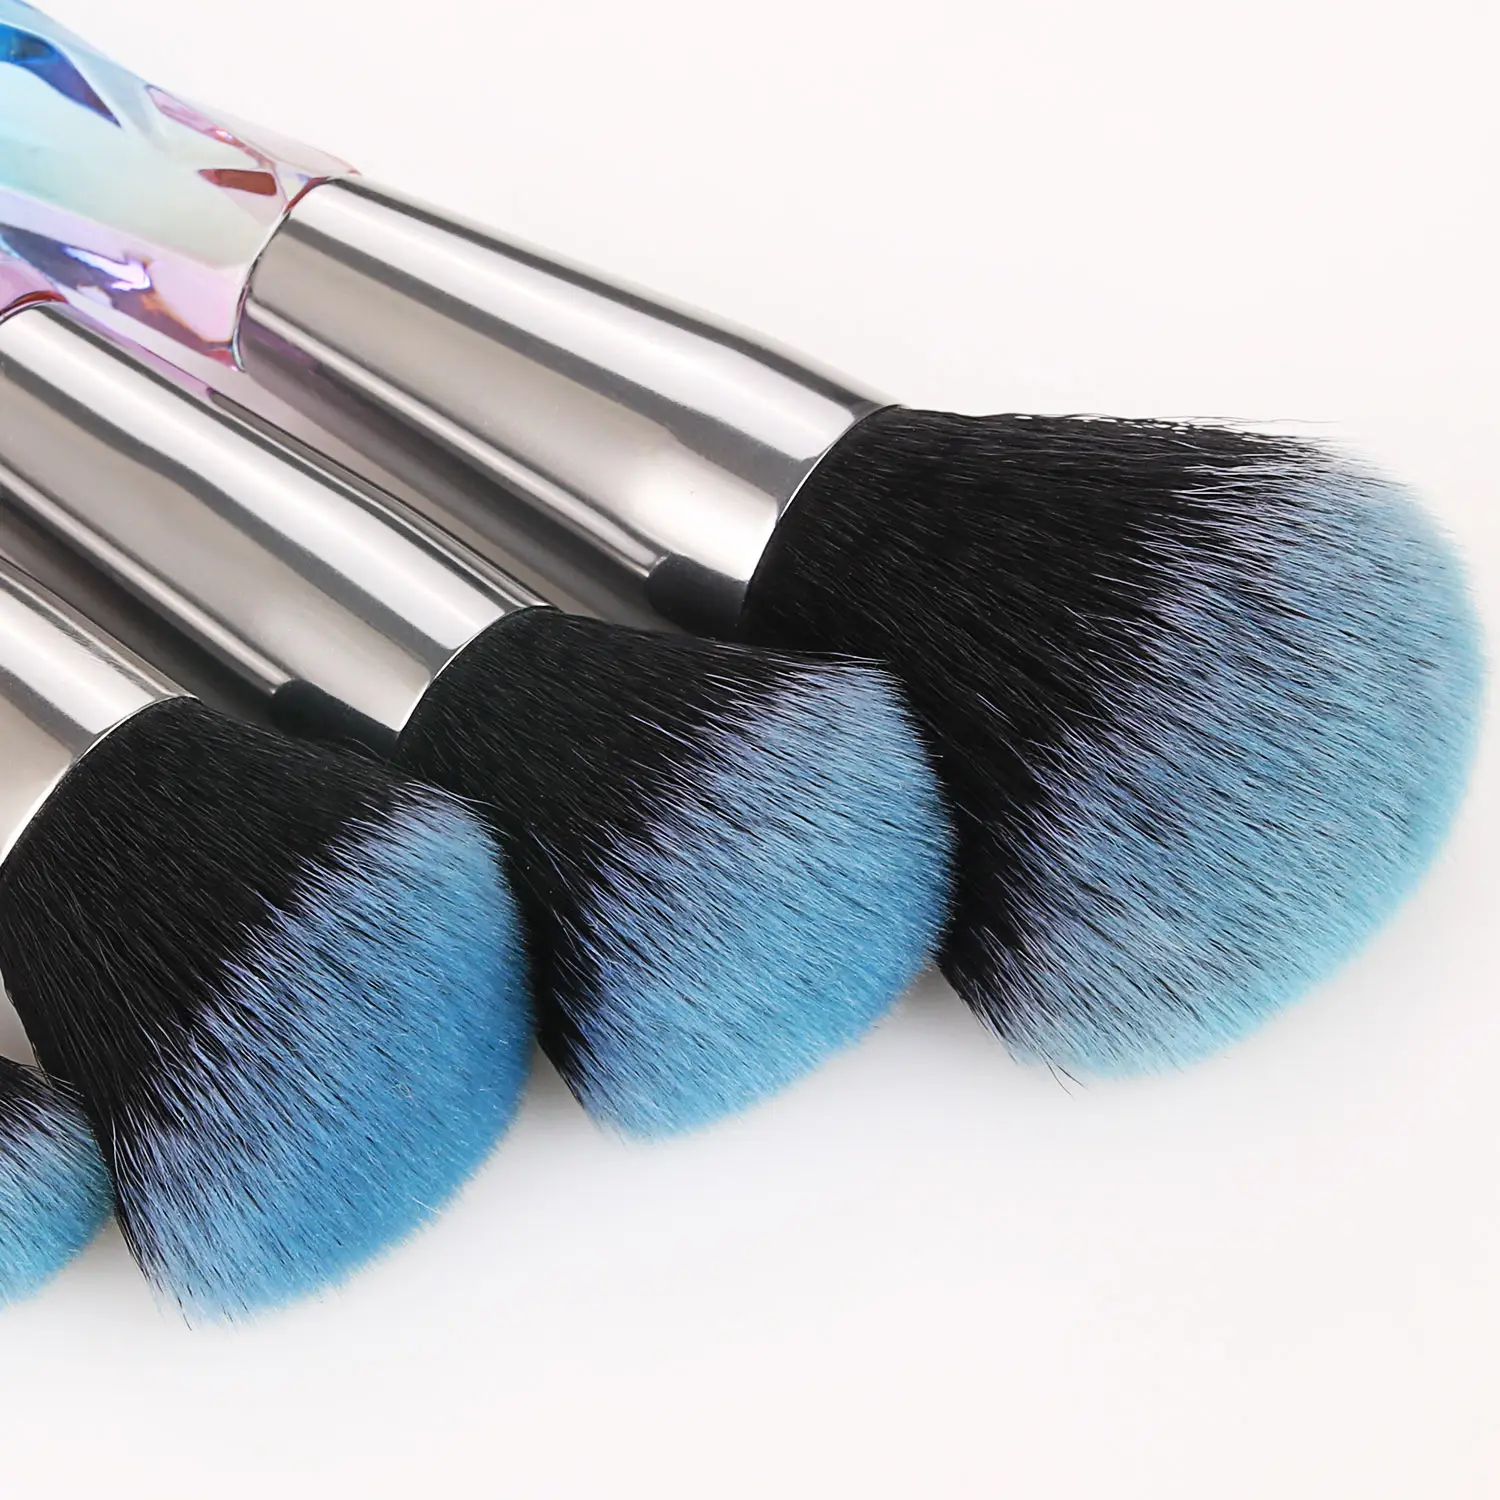 Makeup Brushes Makeup and Tool Kit Synthetic Brush Morphe Portable Makeup Eyeshadow Brush Set